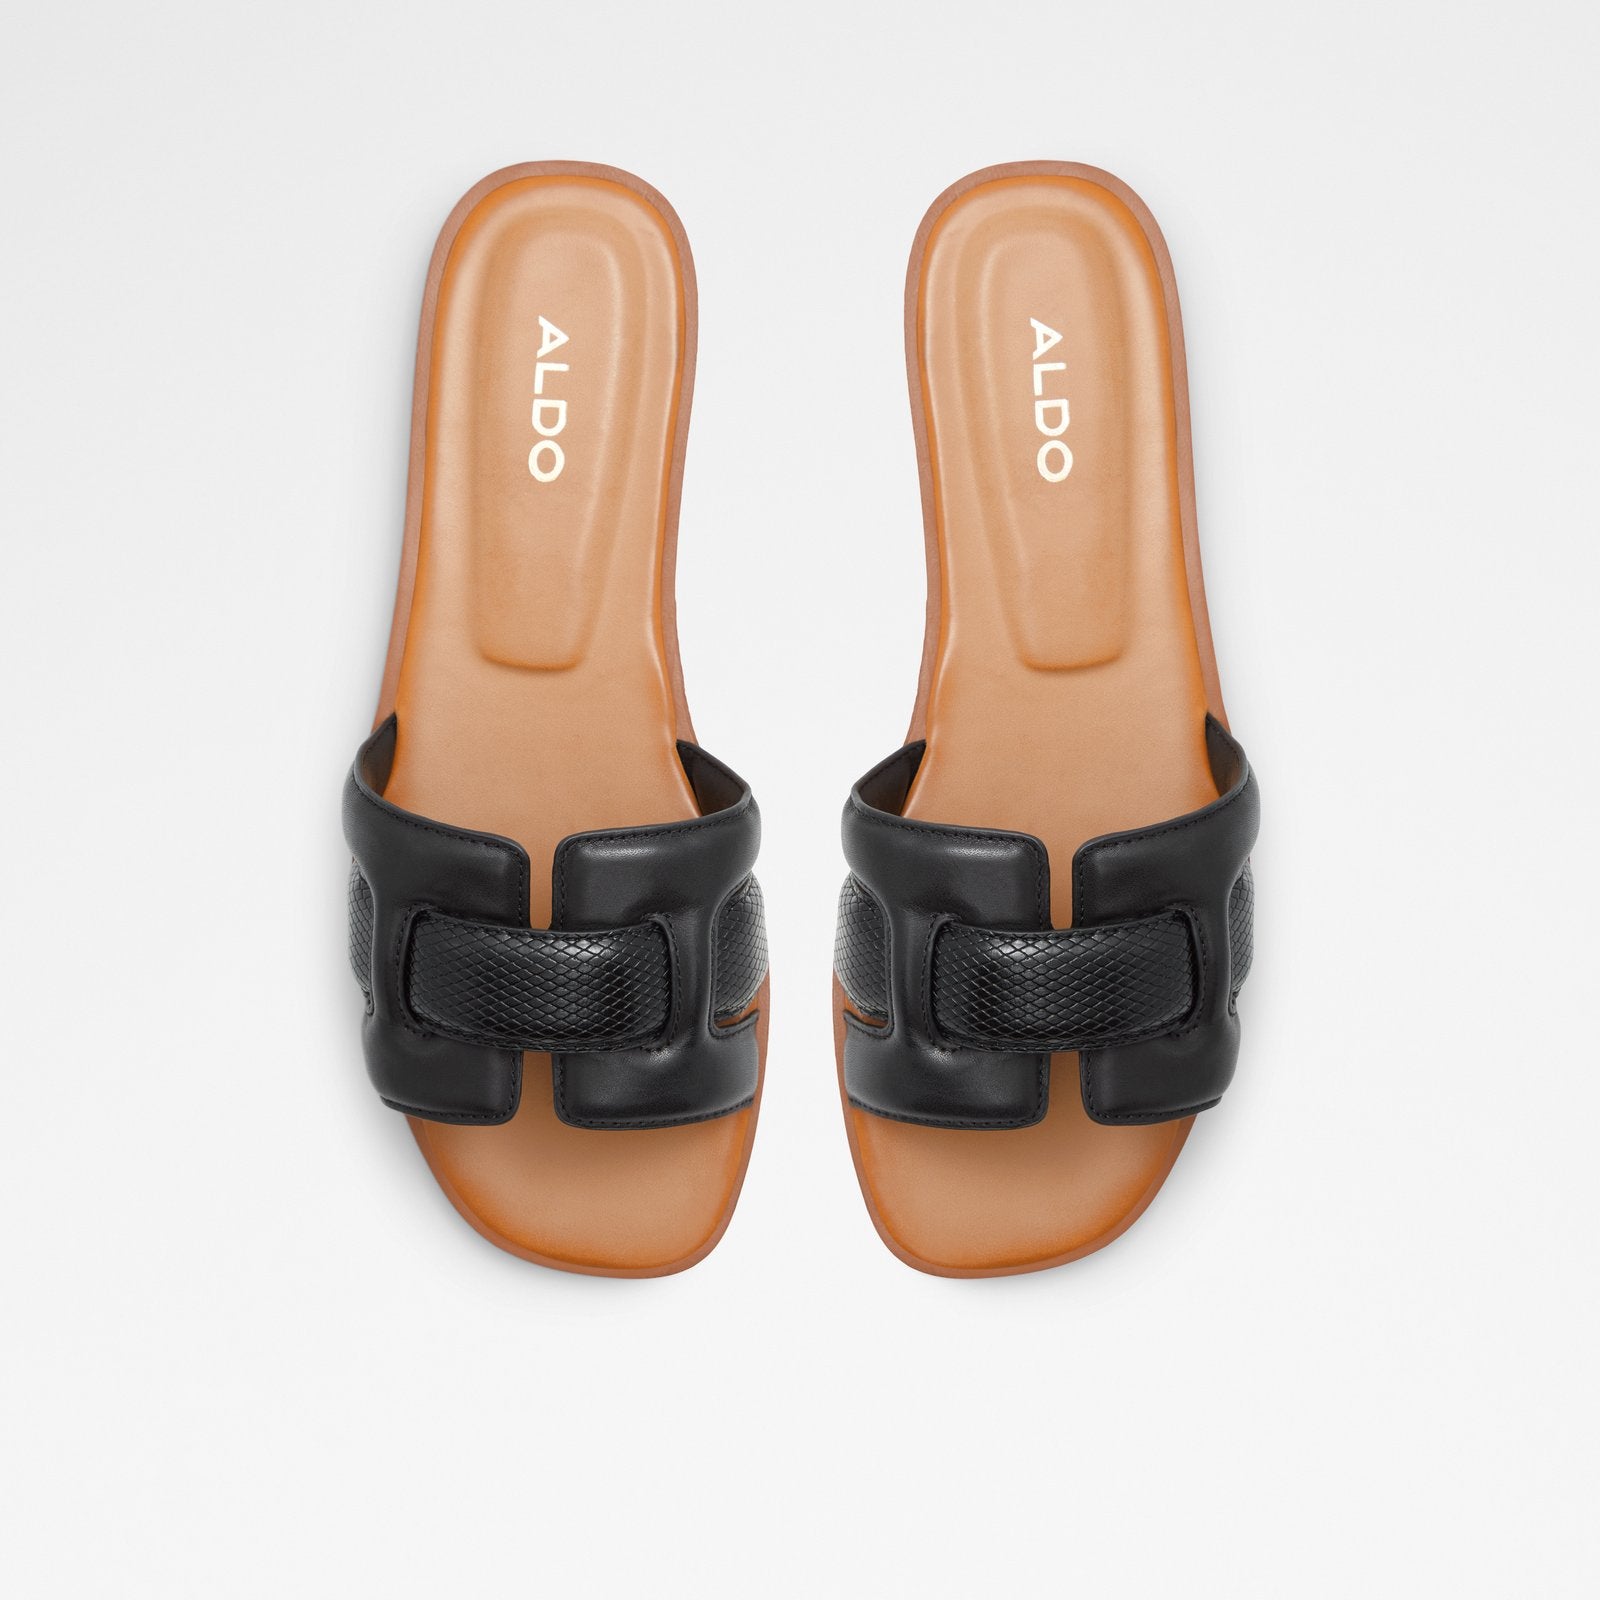 Elenaa / Flat Sandals Women Shoes - Black - ALDO KSA